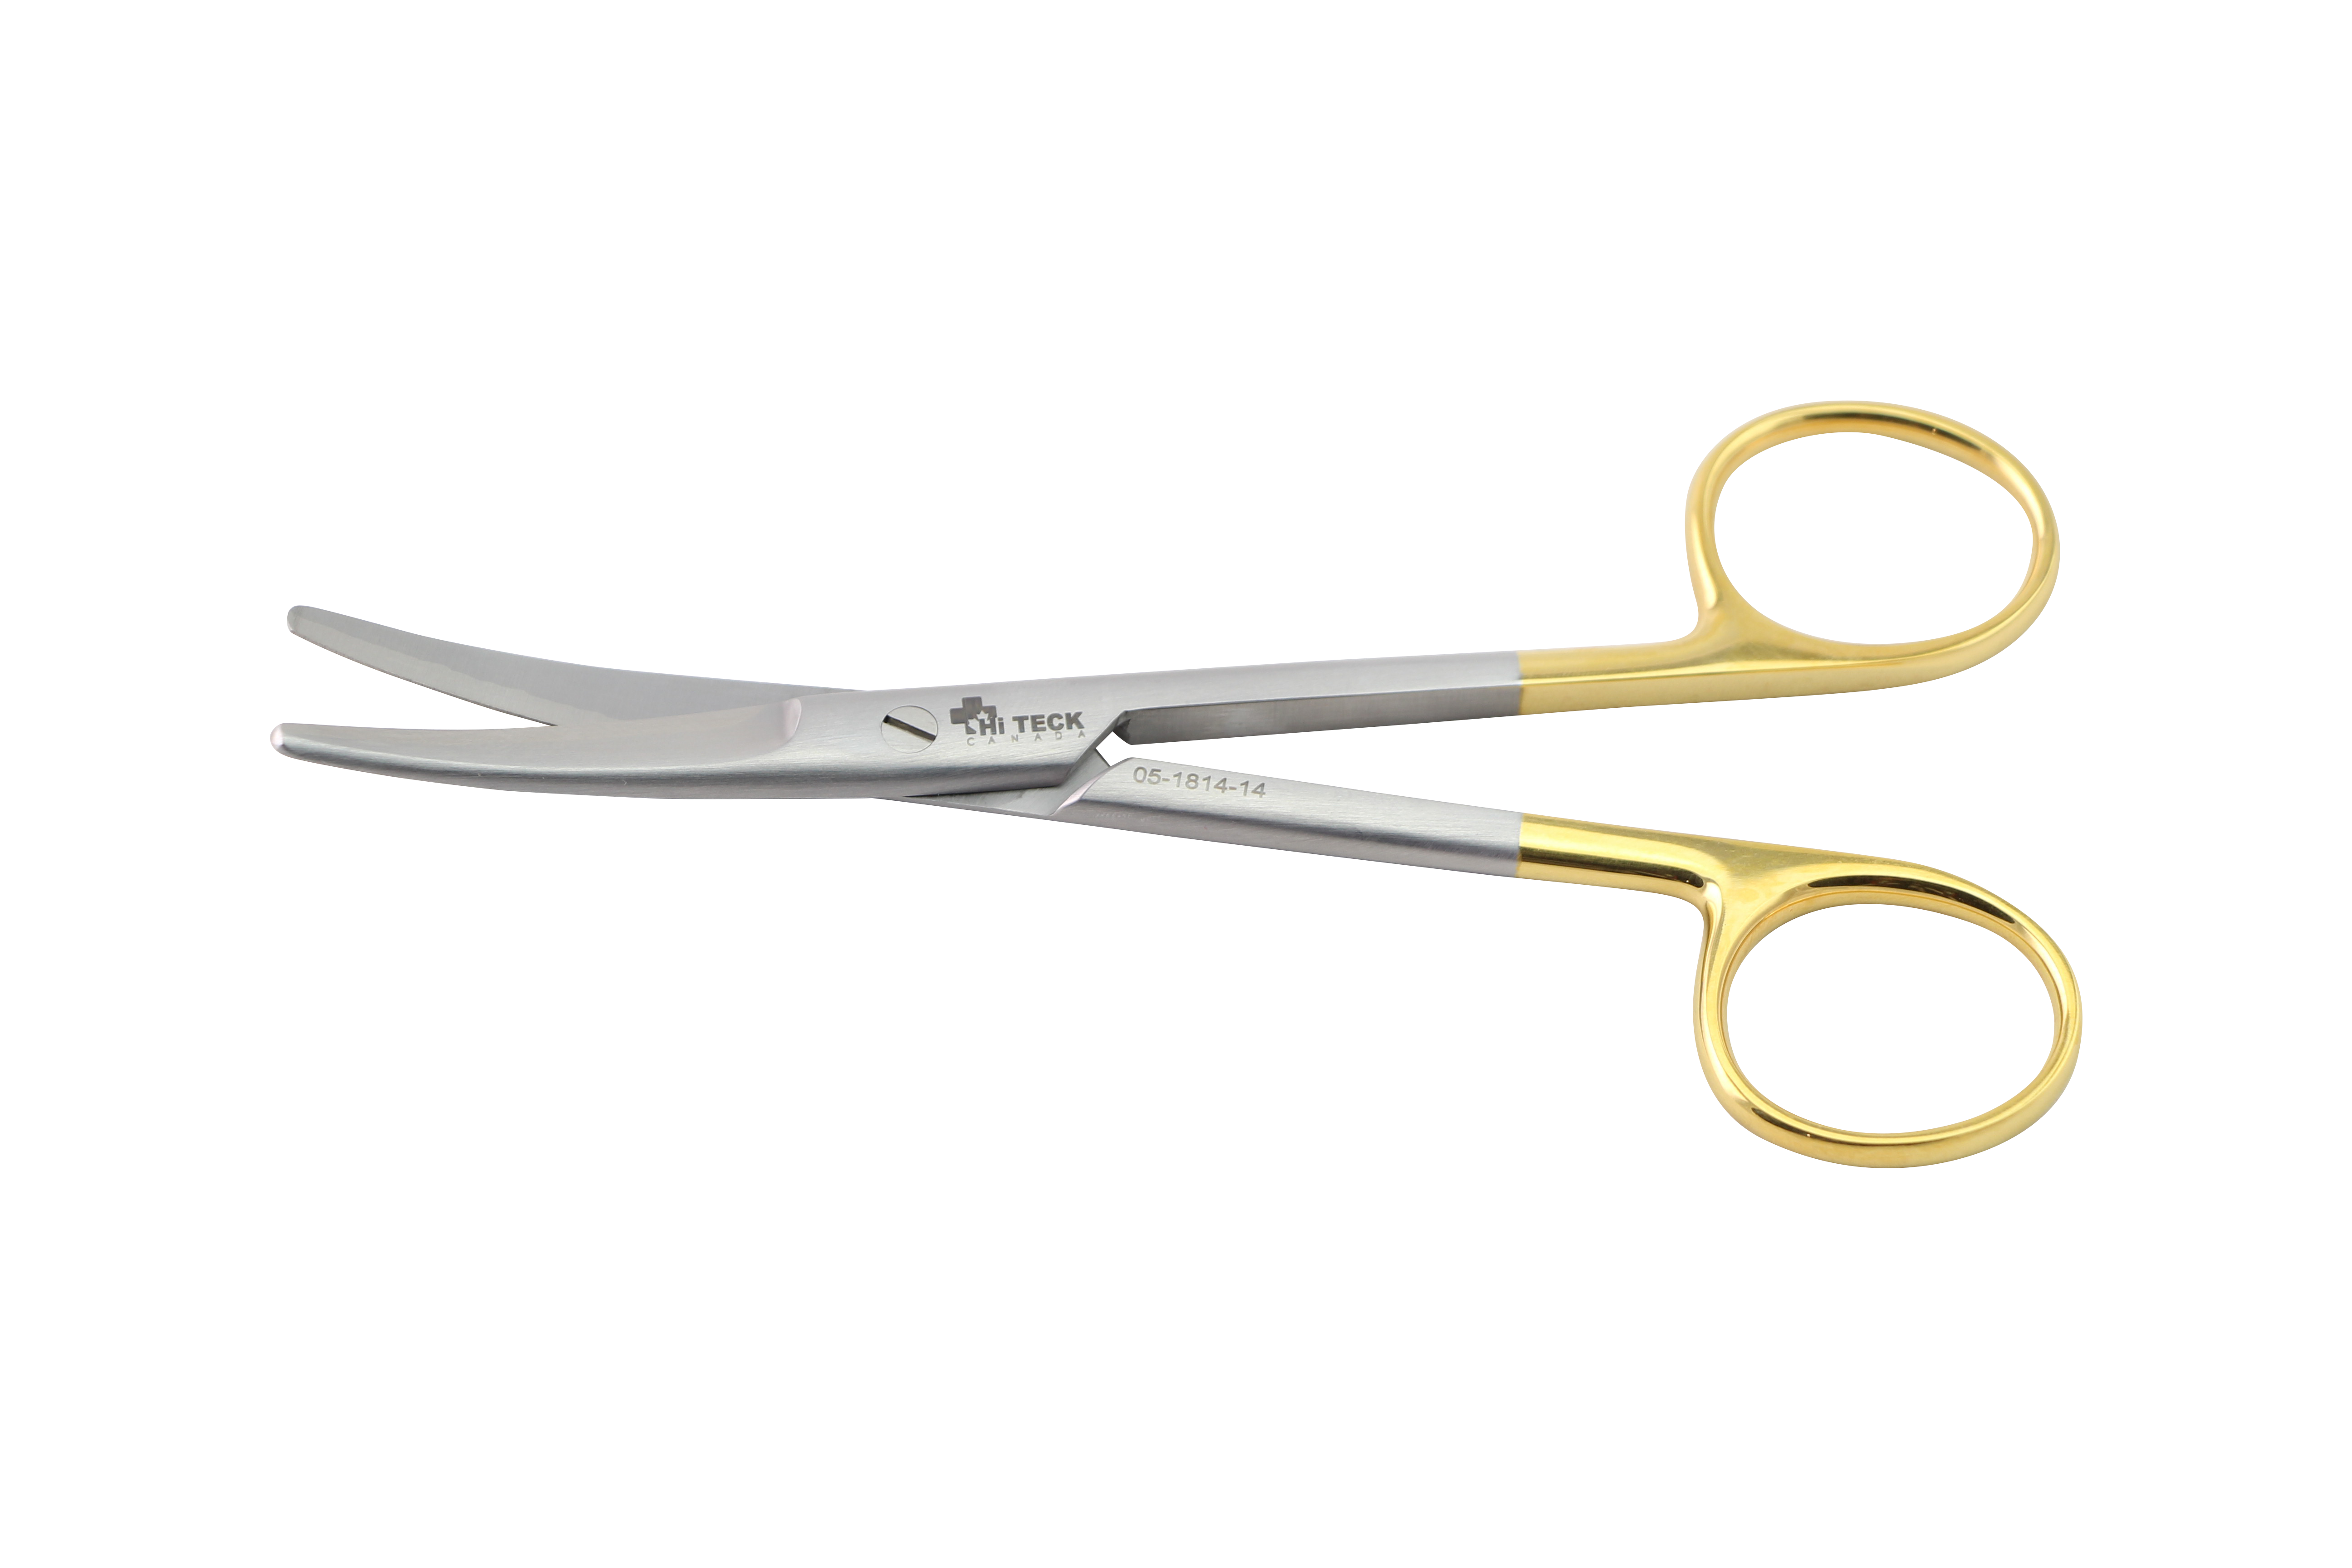 HiTeck Mayo Scissor, Curved, Beveled Blades, Tungsten Carbide, 14.5CM - HiTeck Medical Instruments